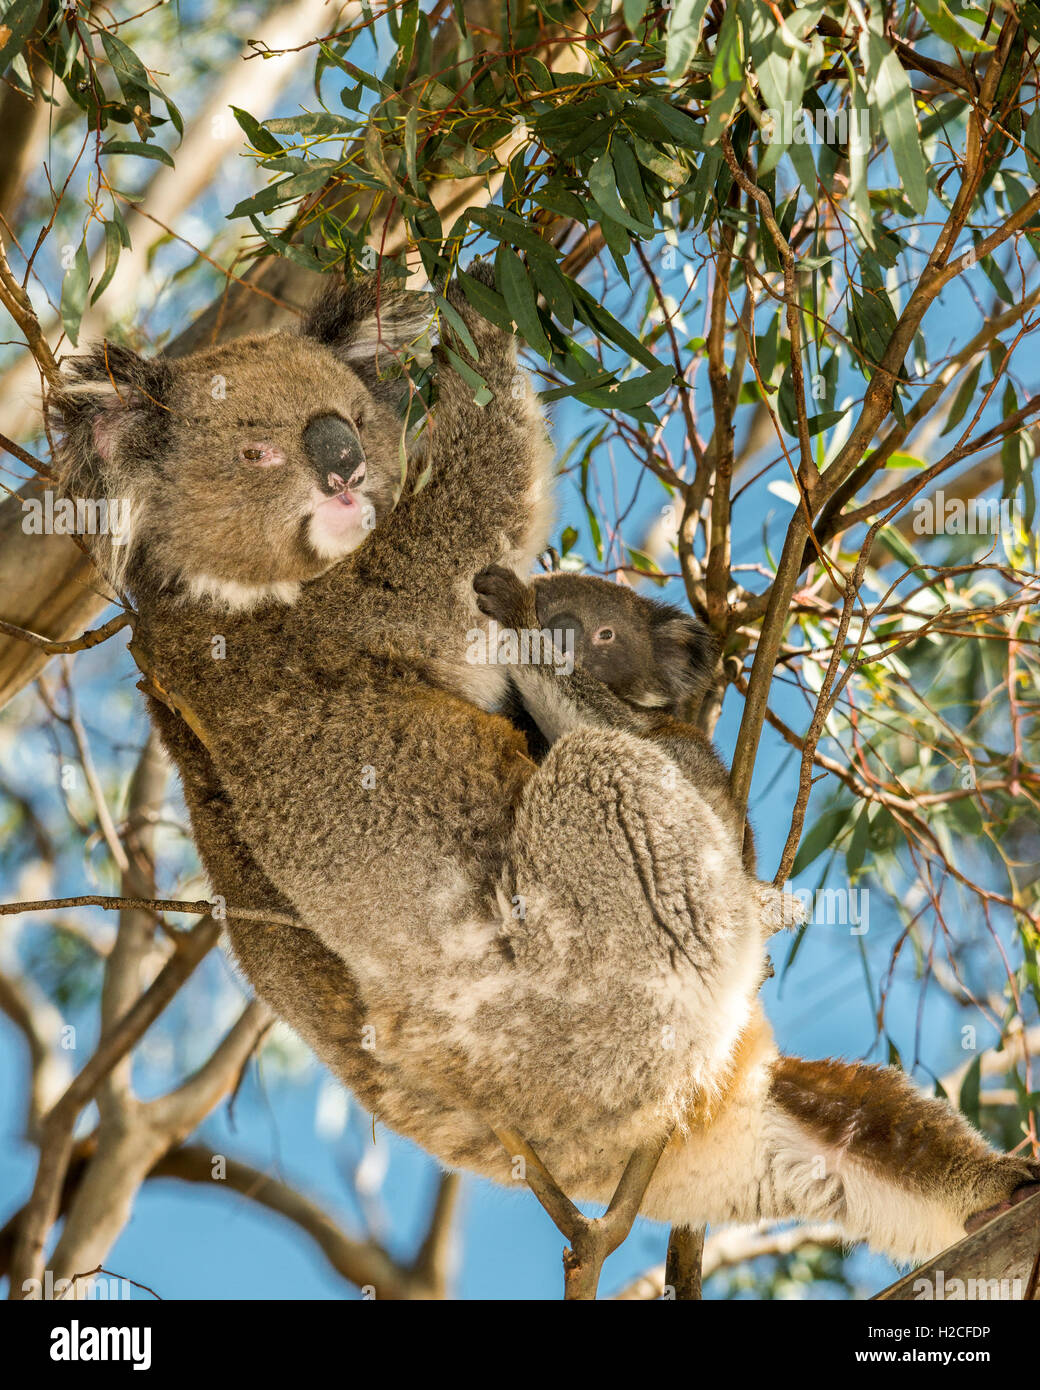 A female wild koala and her joey feeding on eucalyptus leaves in a tree in the Adelaide hills Australia Stock Photo